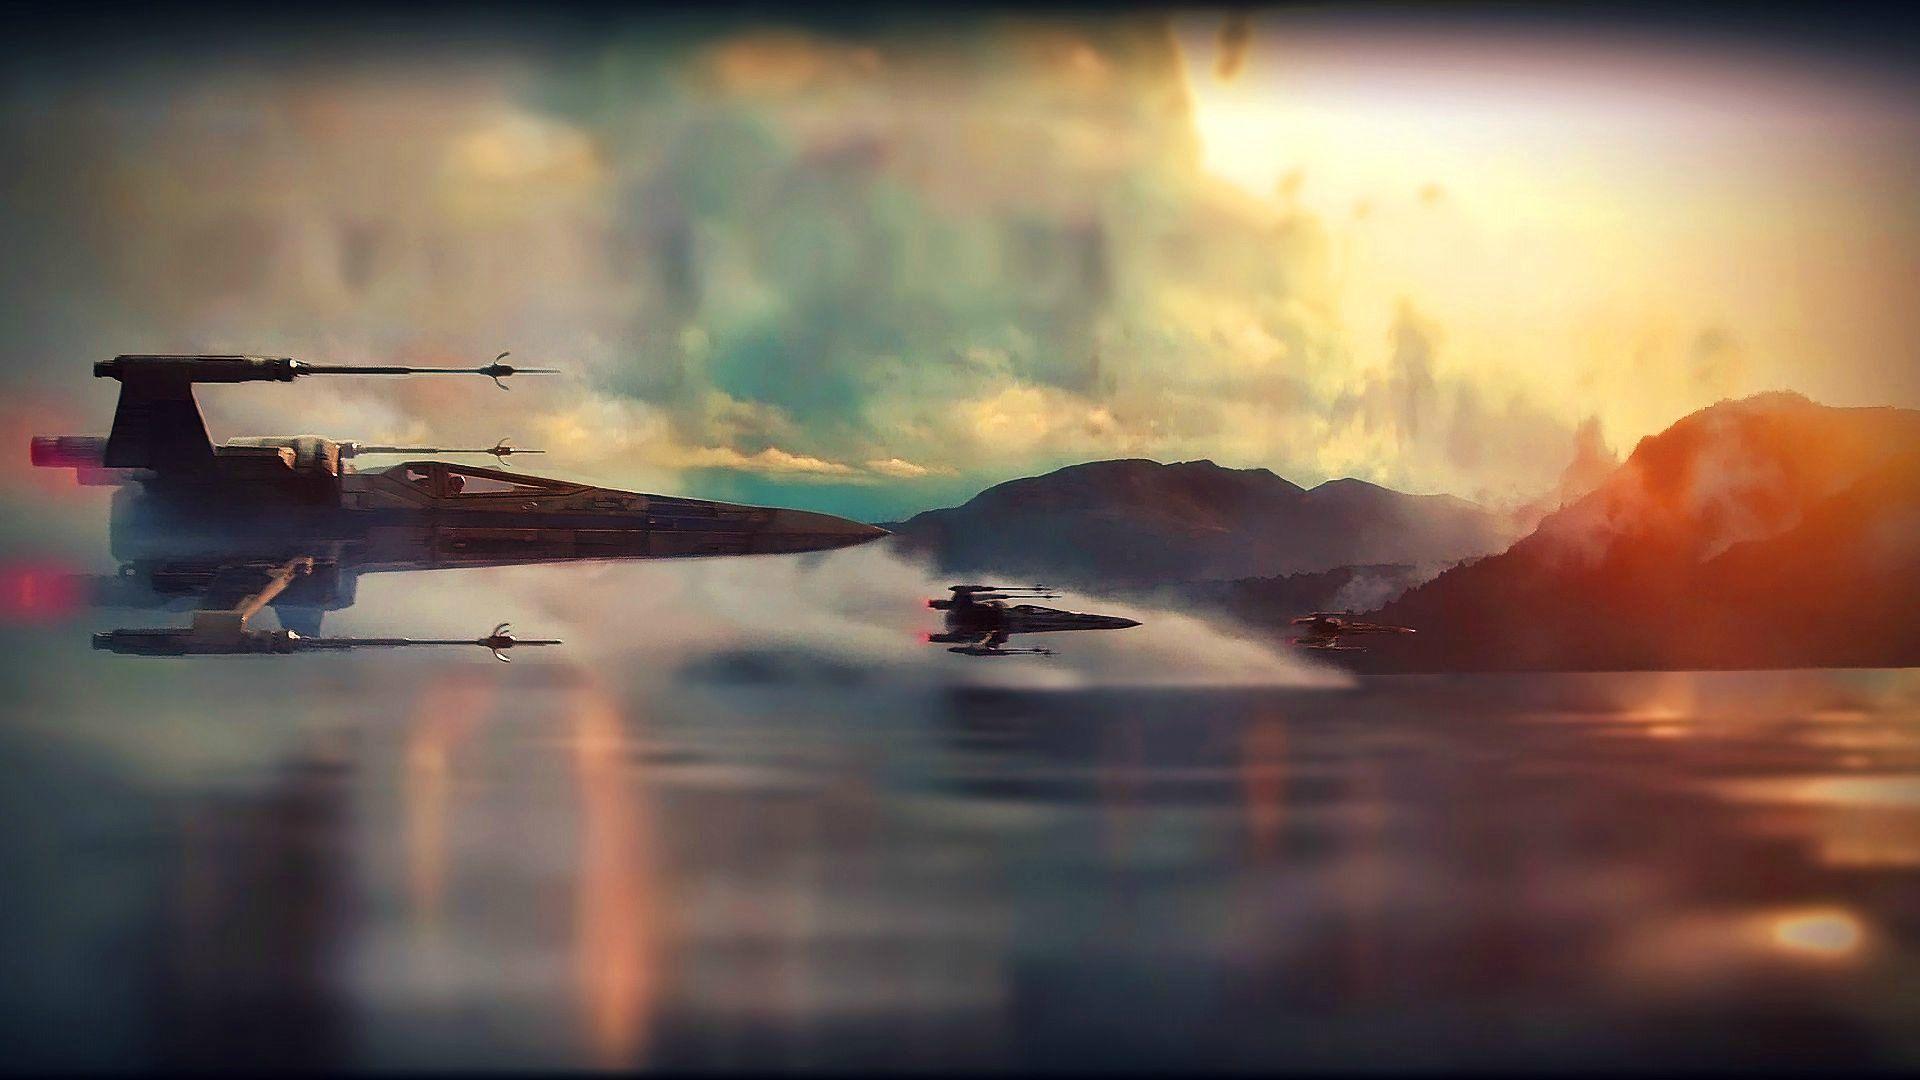 Star Wars Episode VII: The Force Awakens HD Wallpaper. Background